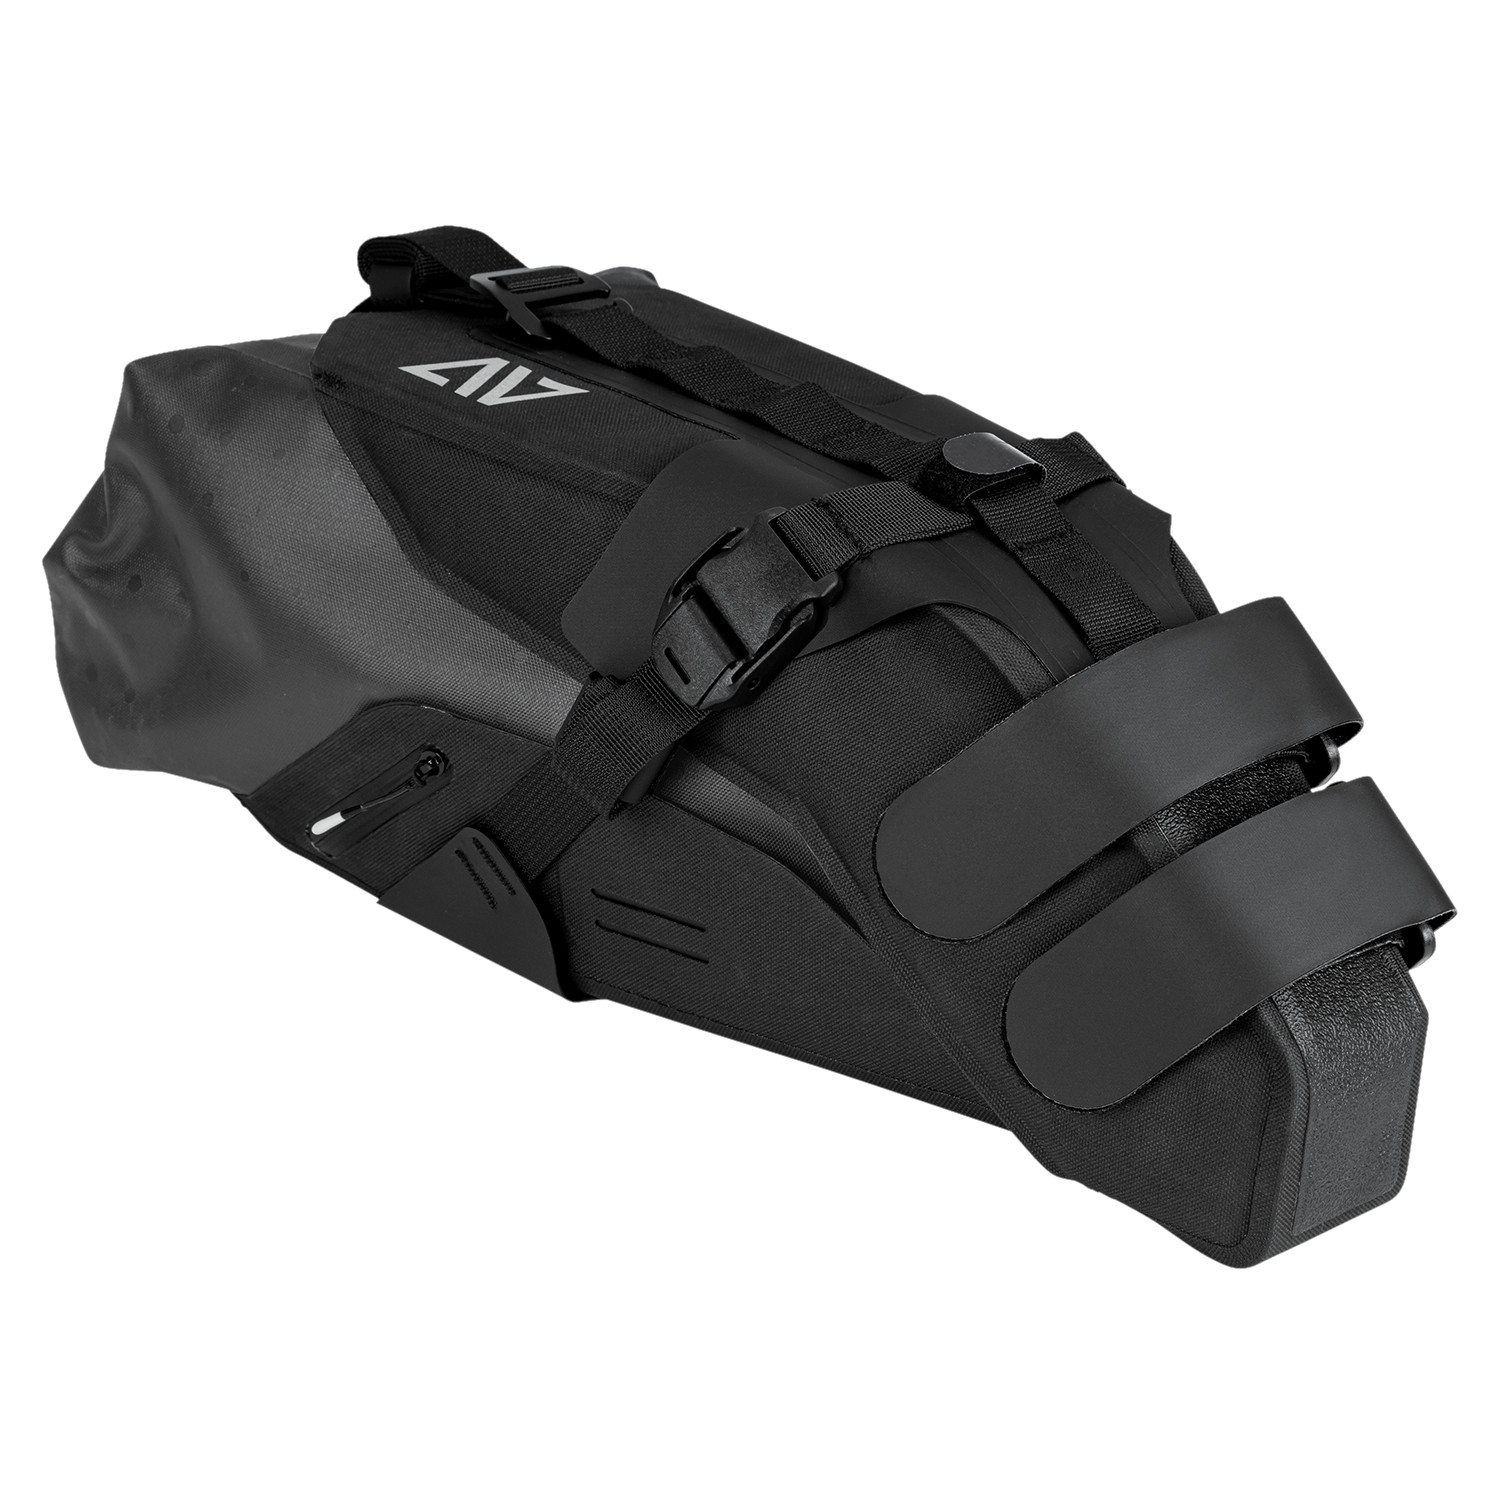 Productfoto van CUBE ACID PACK PRO 11 Saddle Bag - black